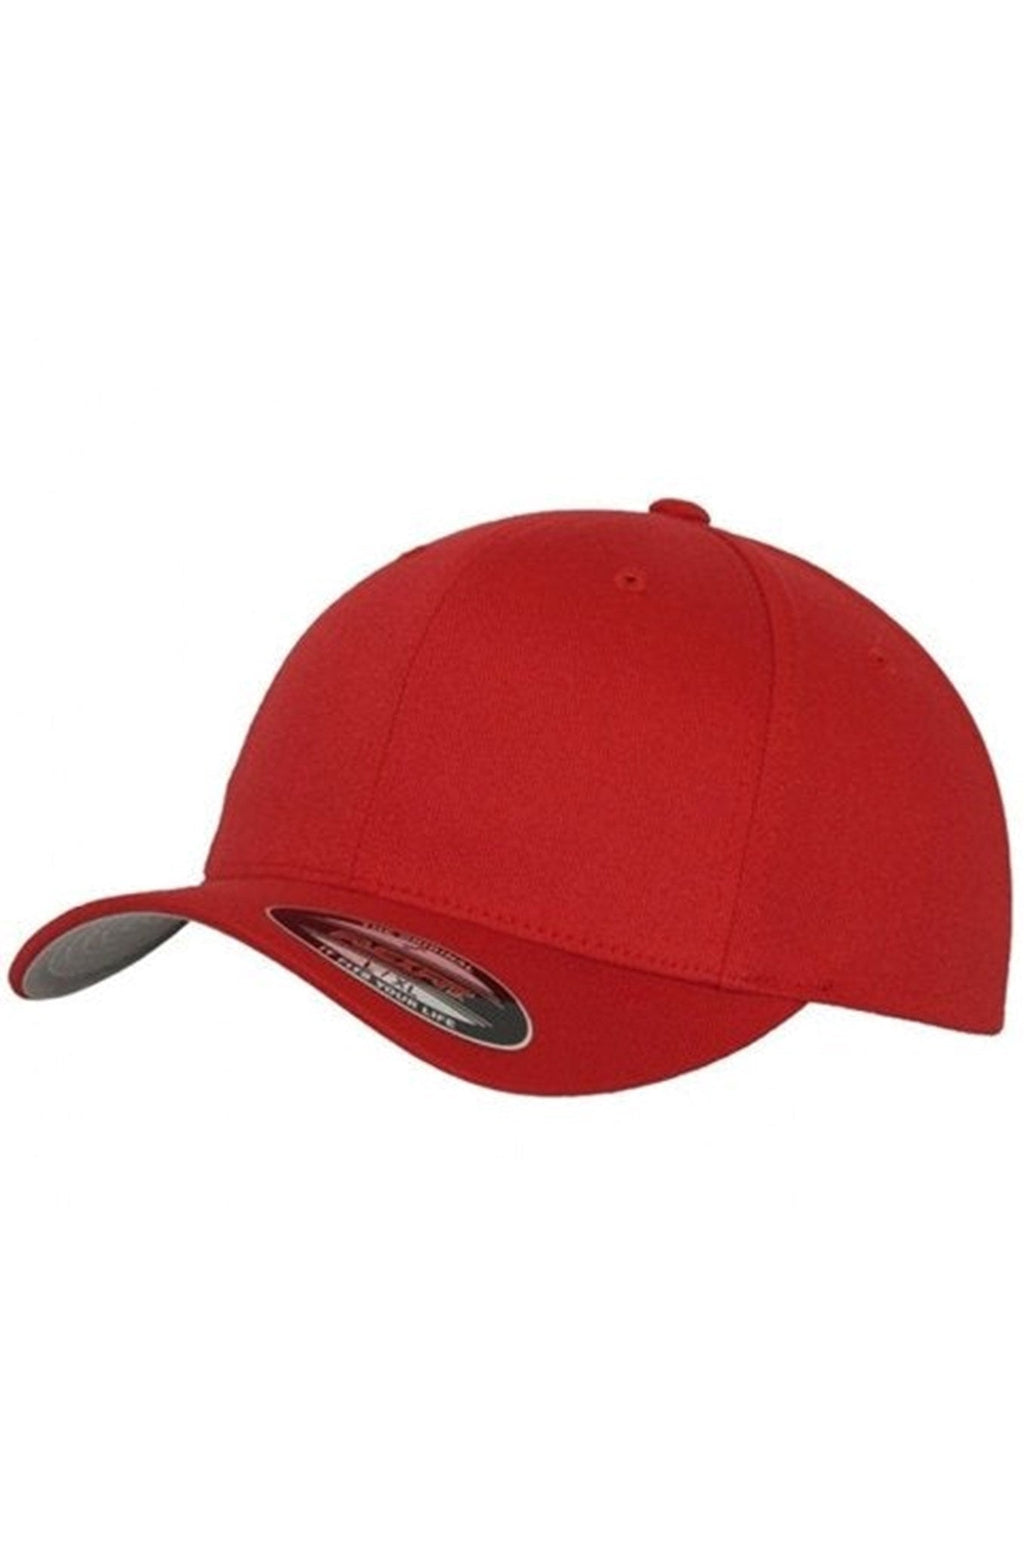 Originálna baseballová čiapka FlexFit - červená